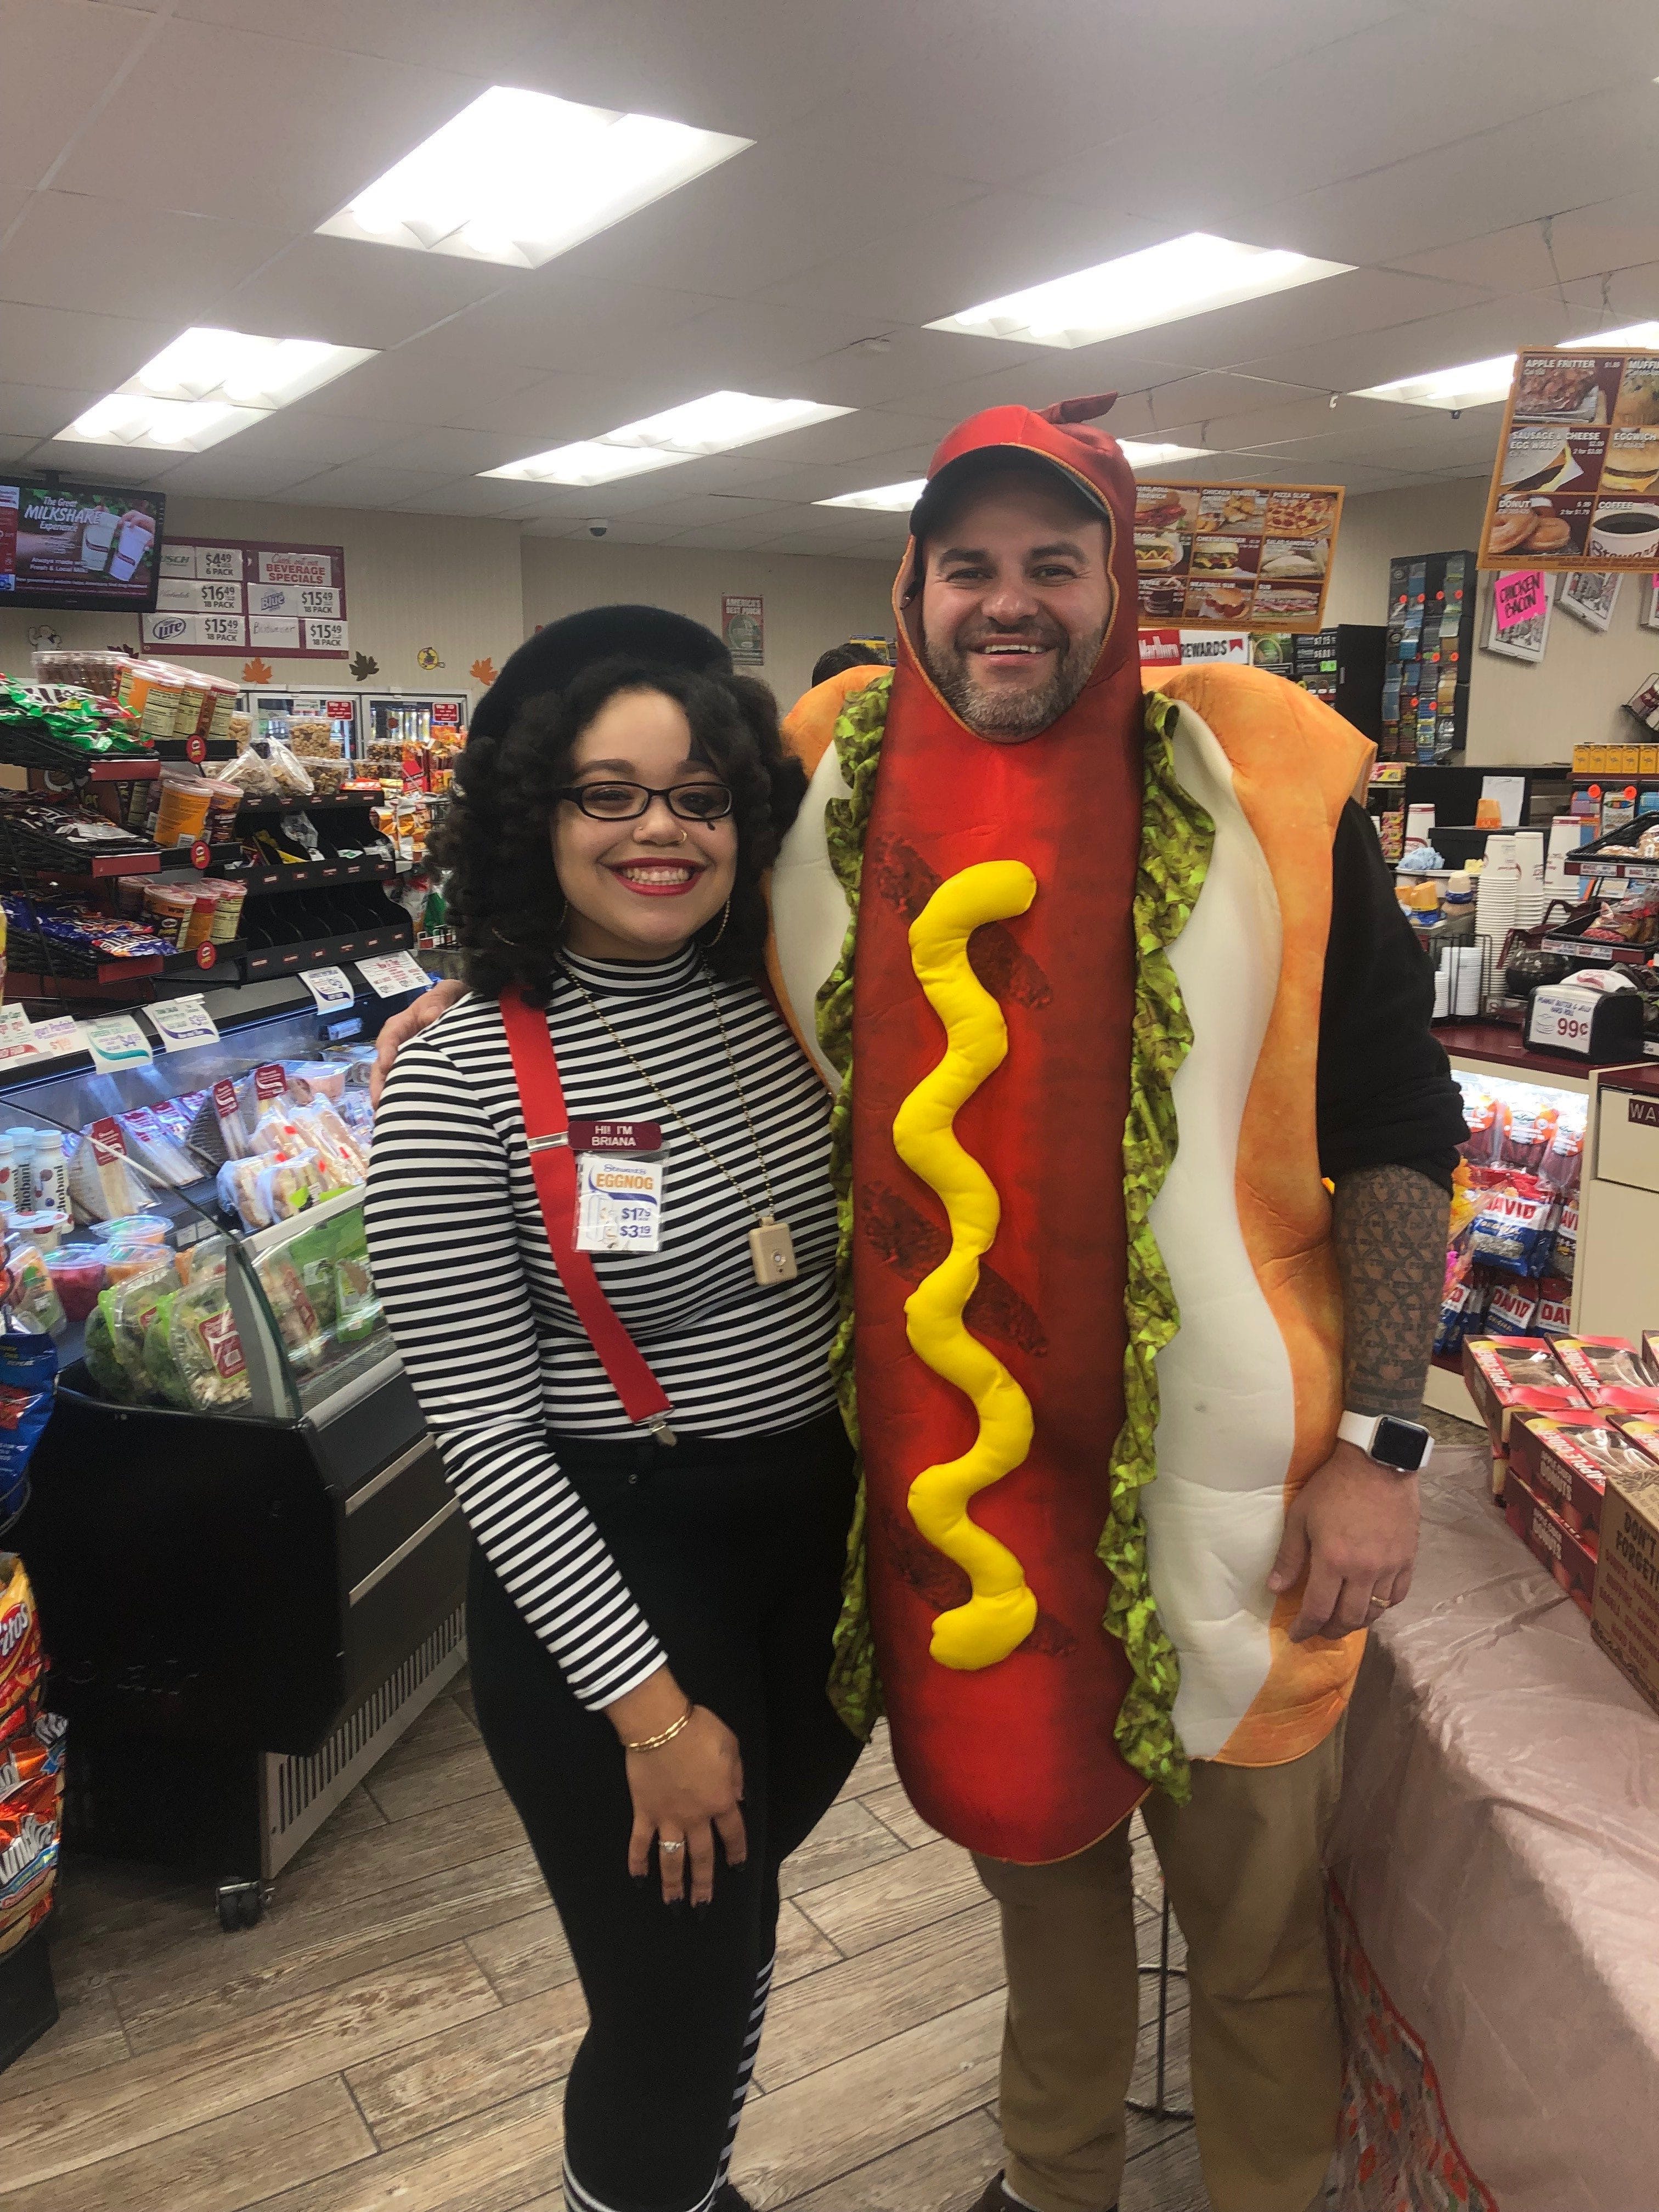 Hot Dog costume